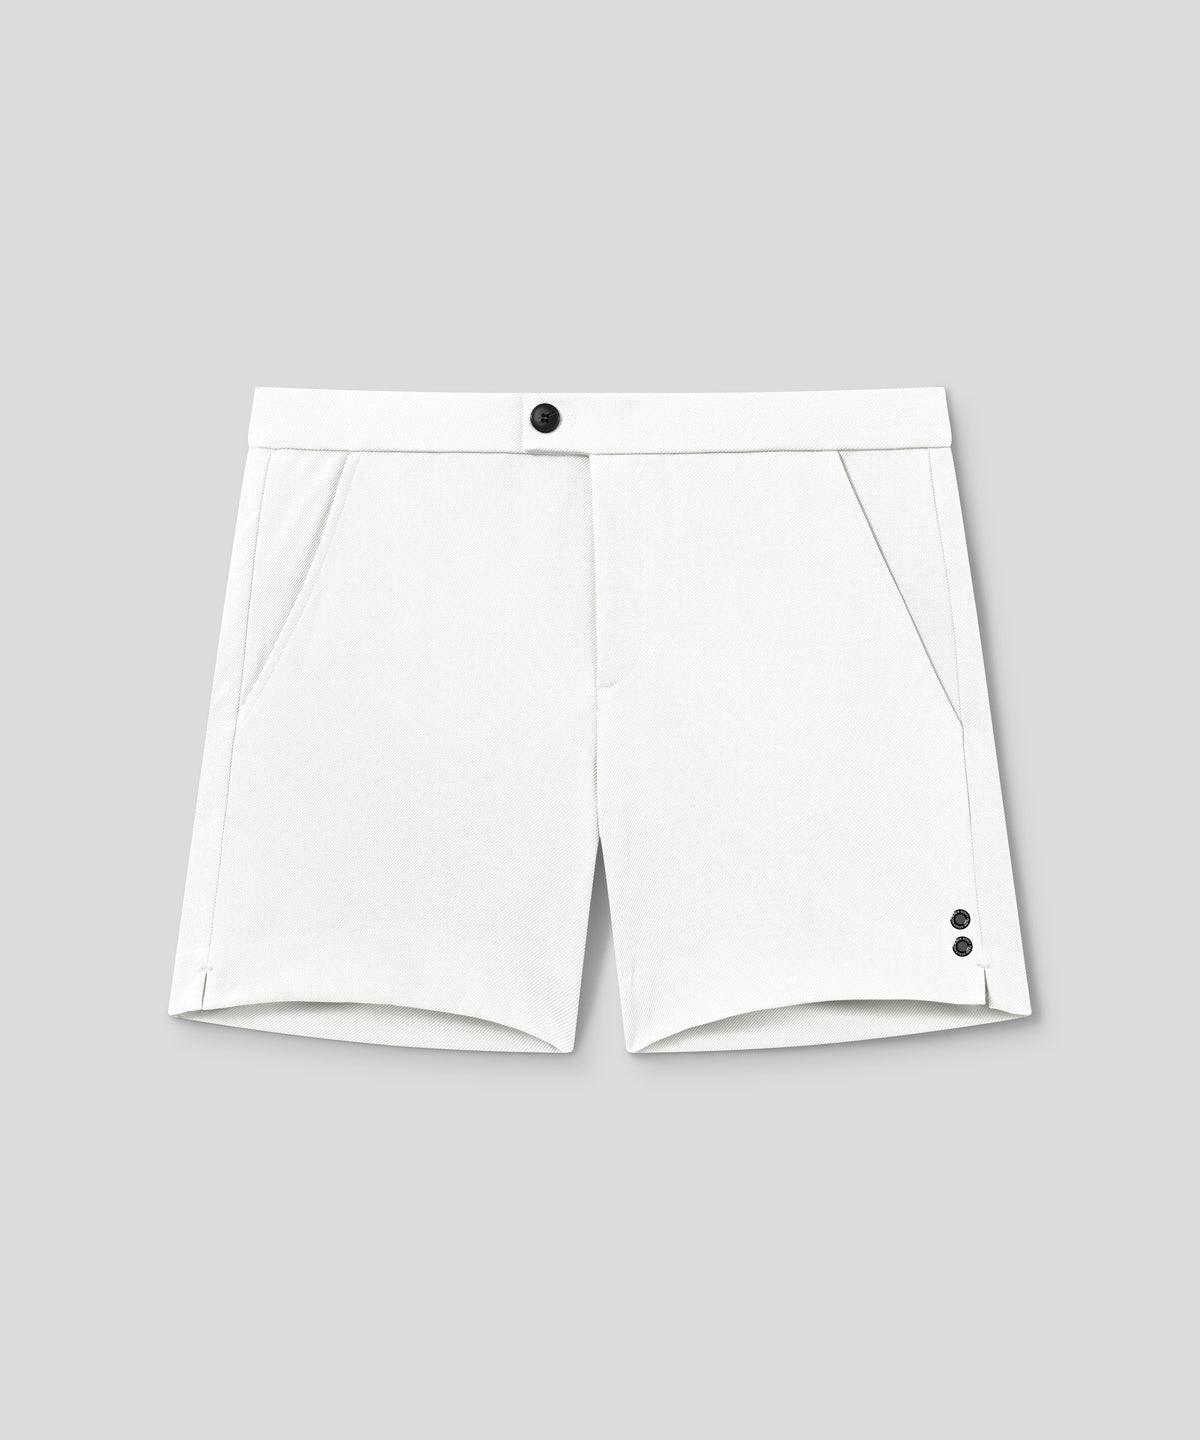 RD Tennis Shorts: White